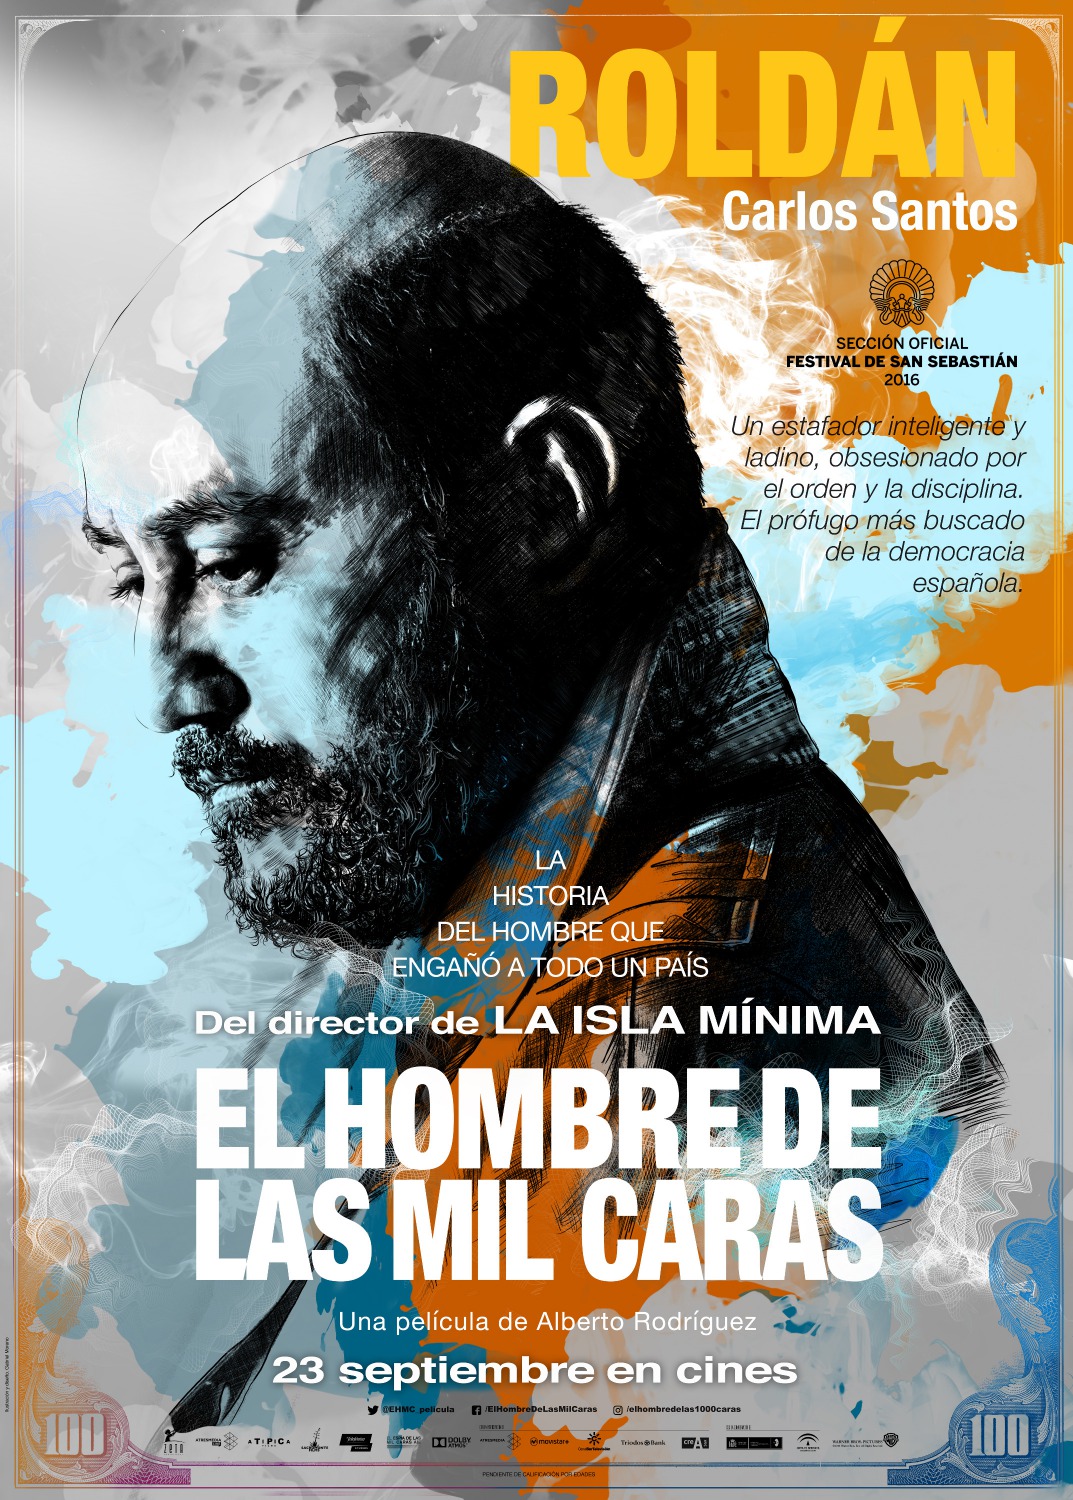 Extra Large Movie Poster Image for El hombre de las mil caras (#5 of 7)